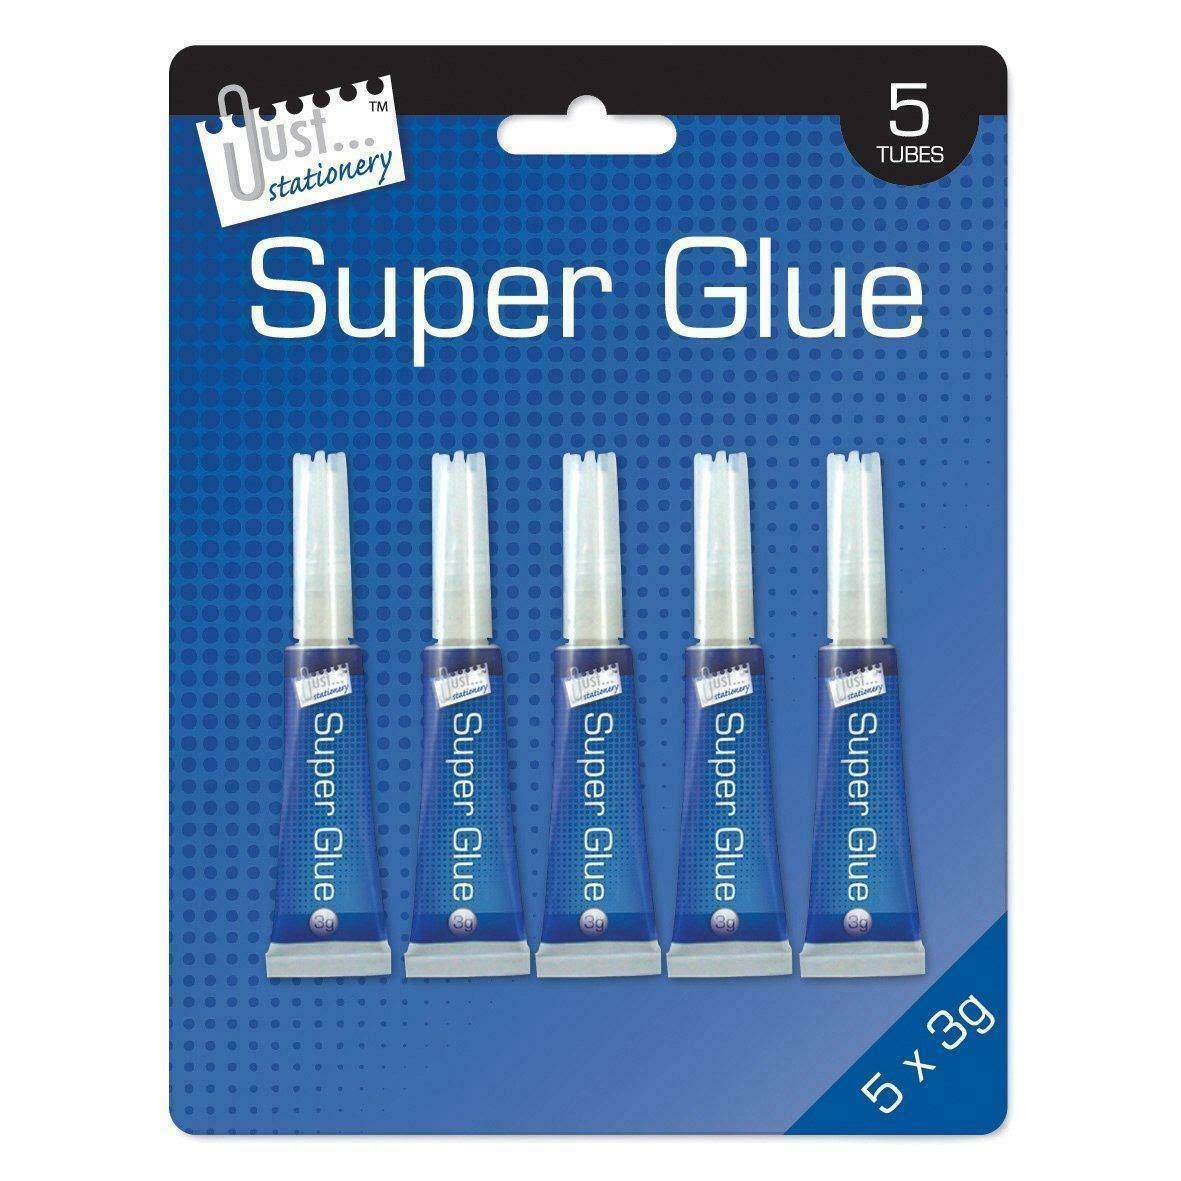 Inkcraft Super Glue Value Pack